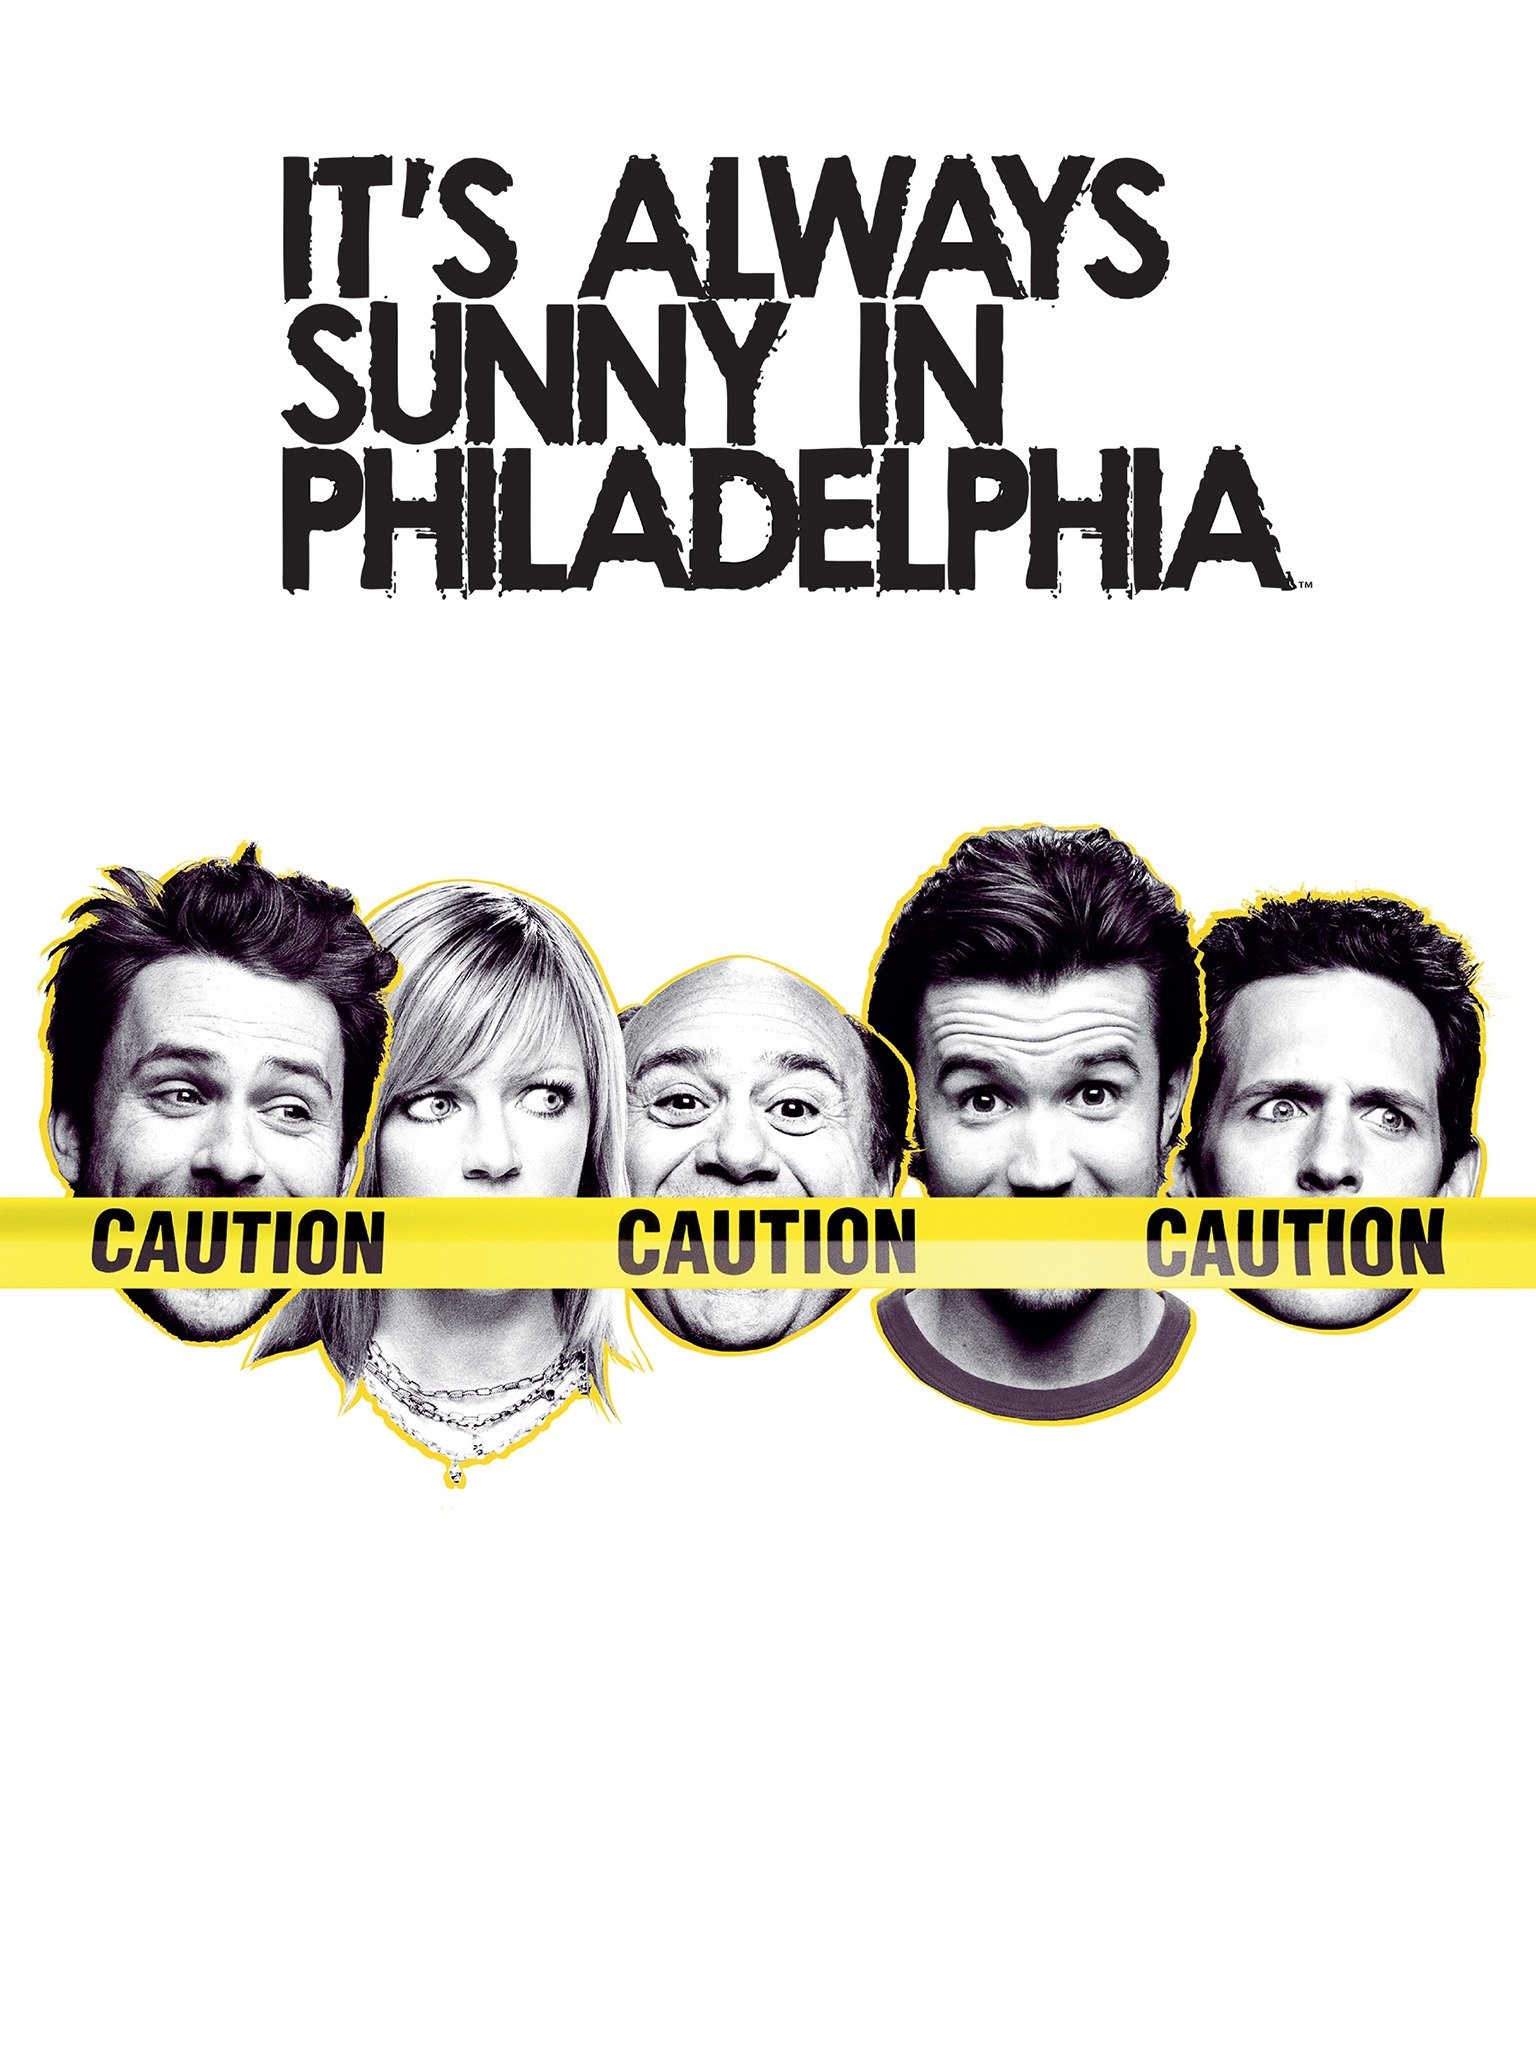 The 20 best episodes of 'It's Always Sunny in Philadelphia